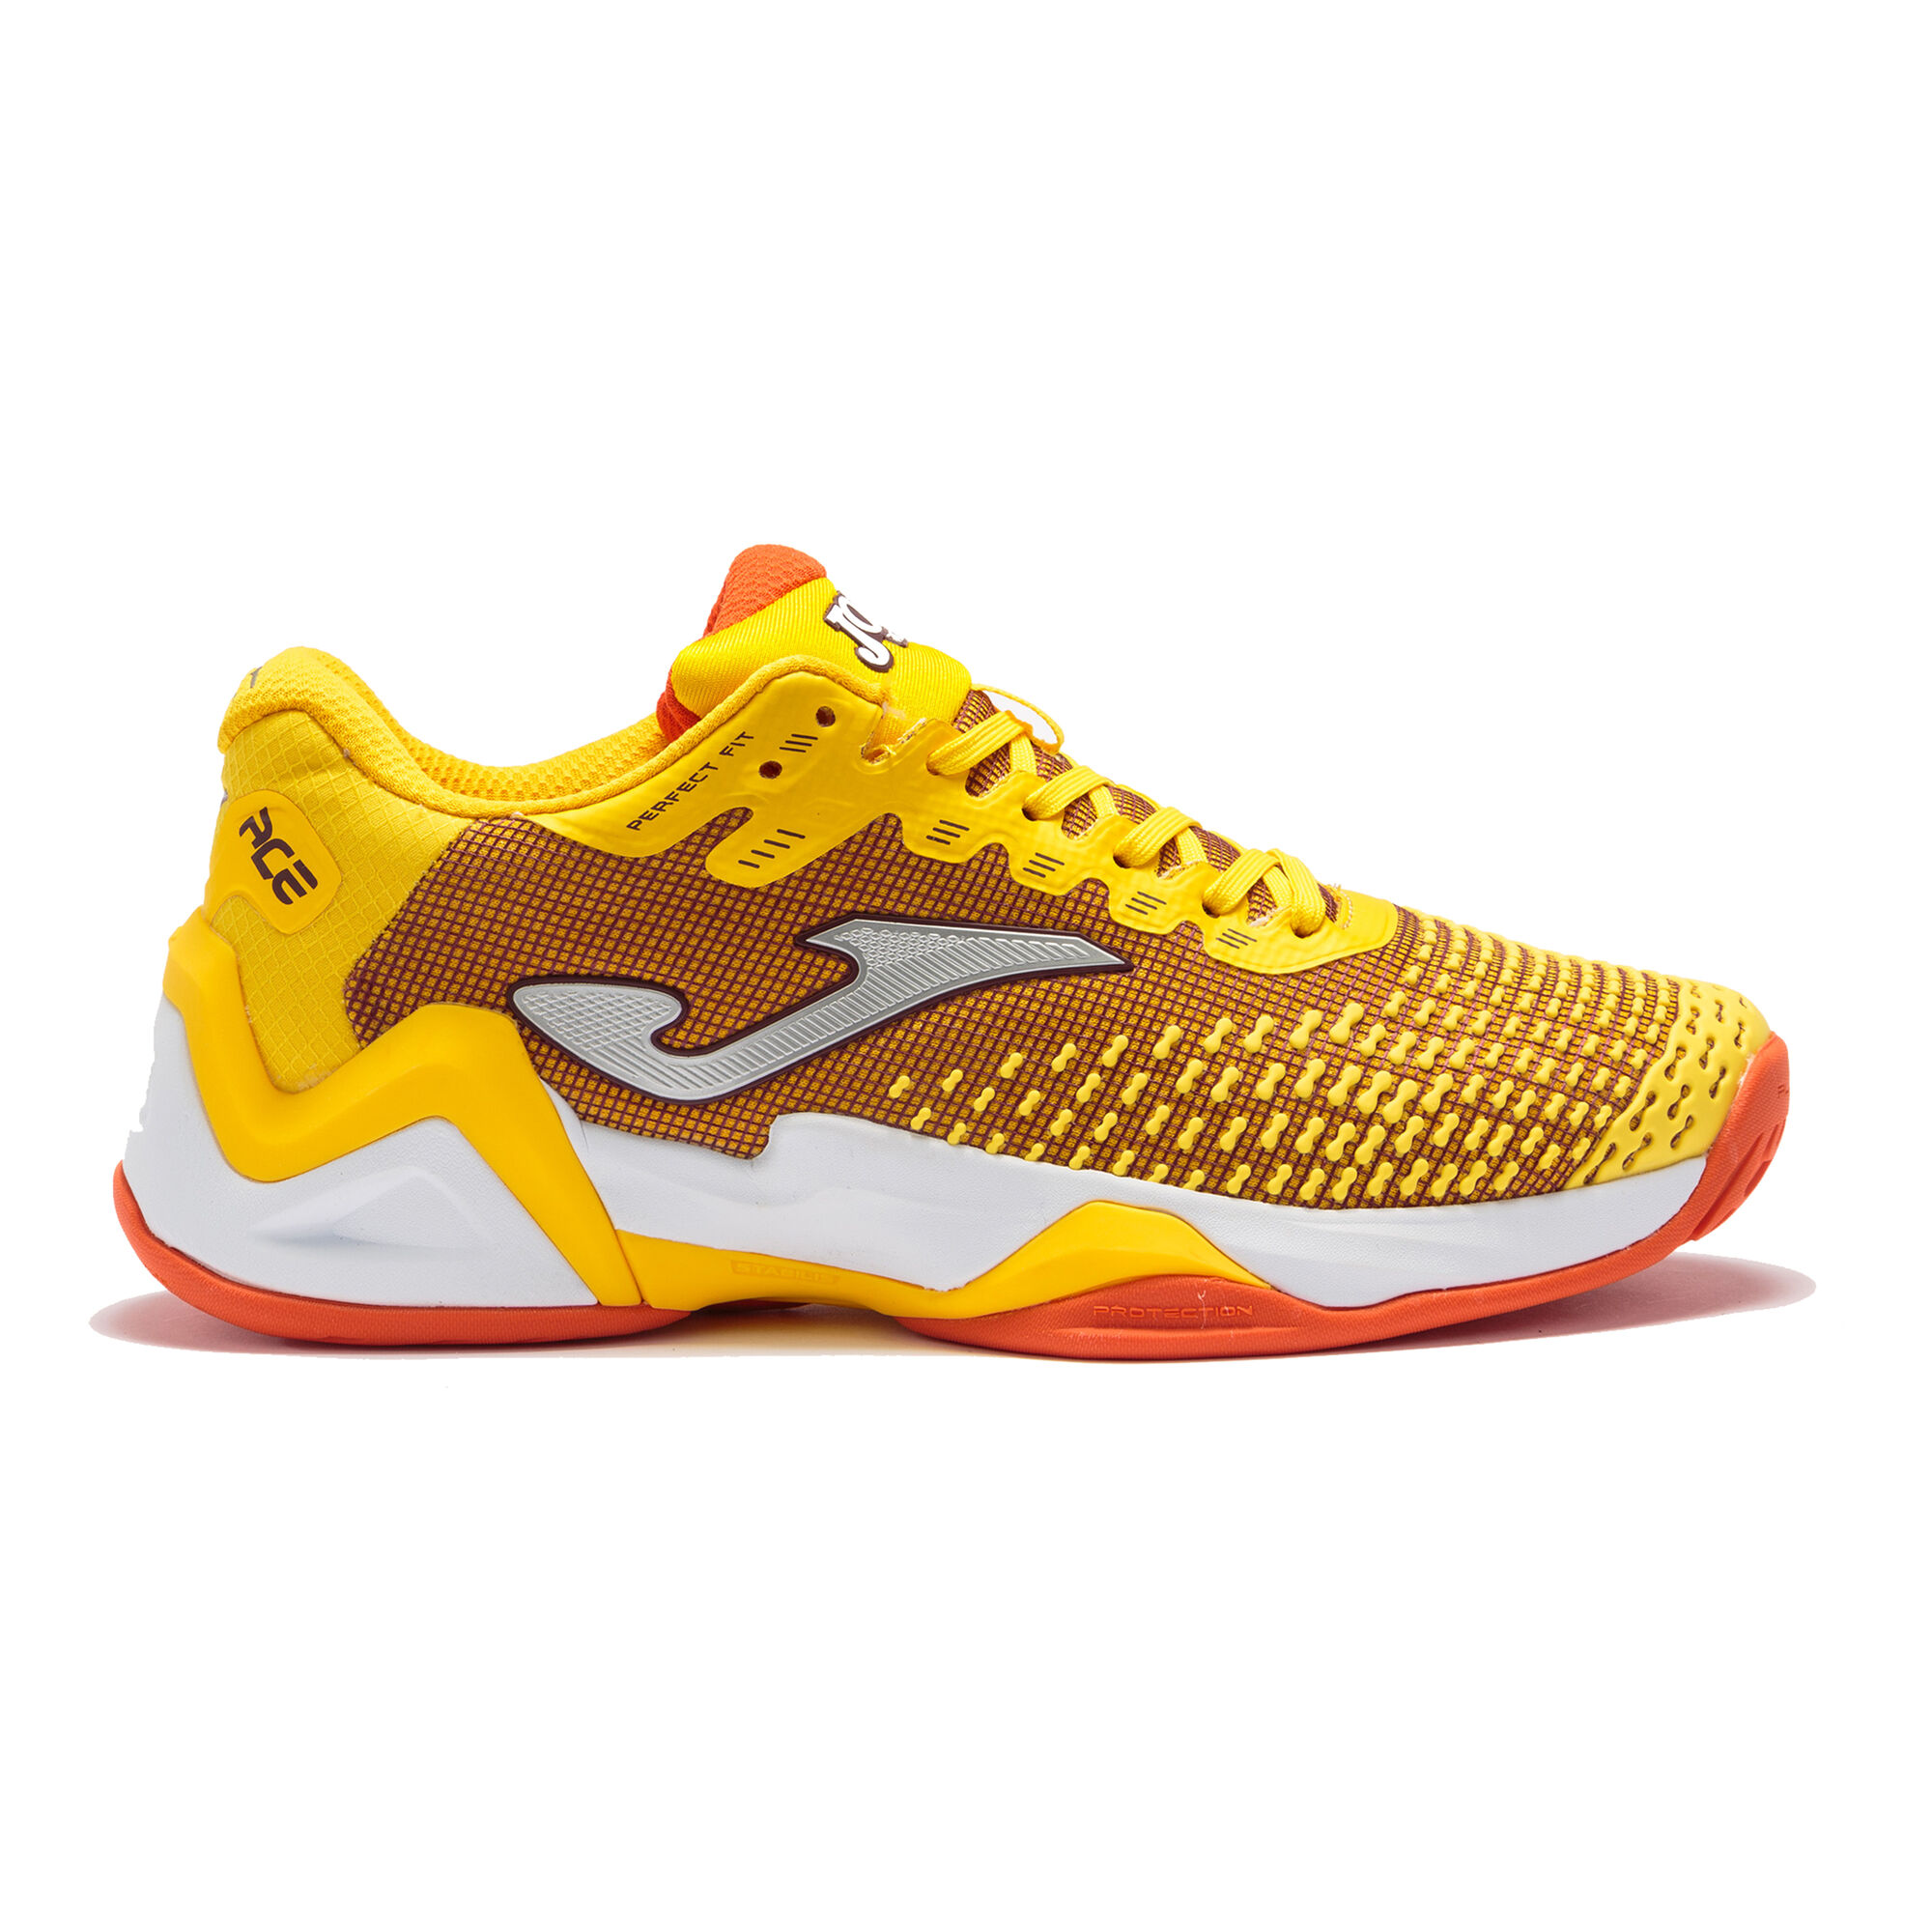 Joma Ace Pro Clay Court Shoe - Golden Orange online | Padel-Point